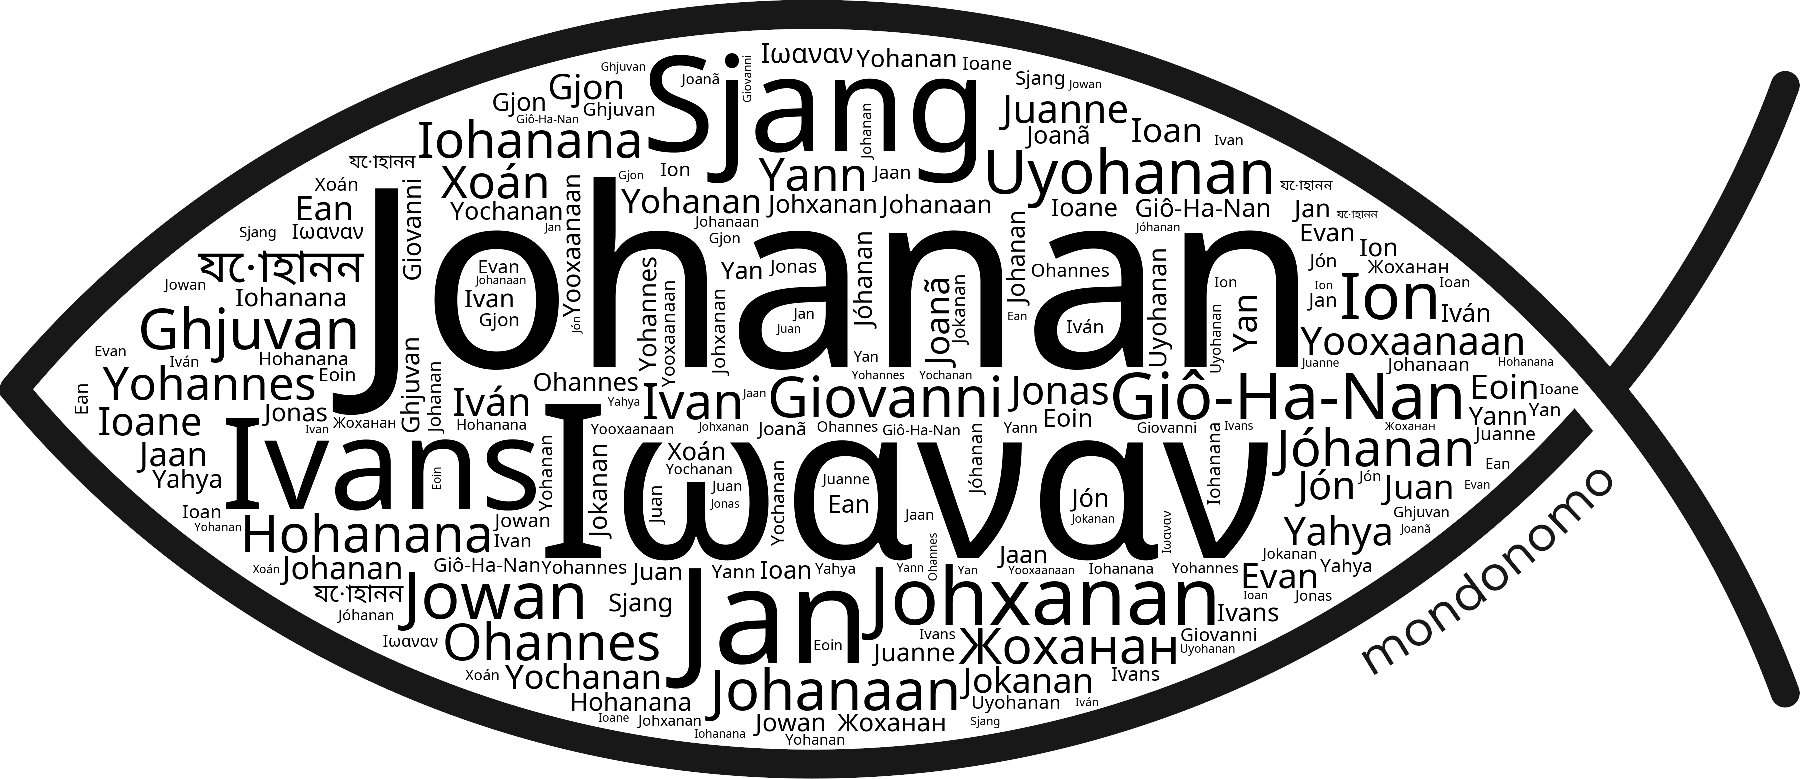 Name Johanan in the world's Bibles